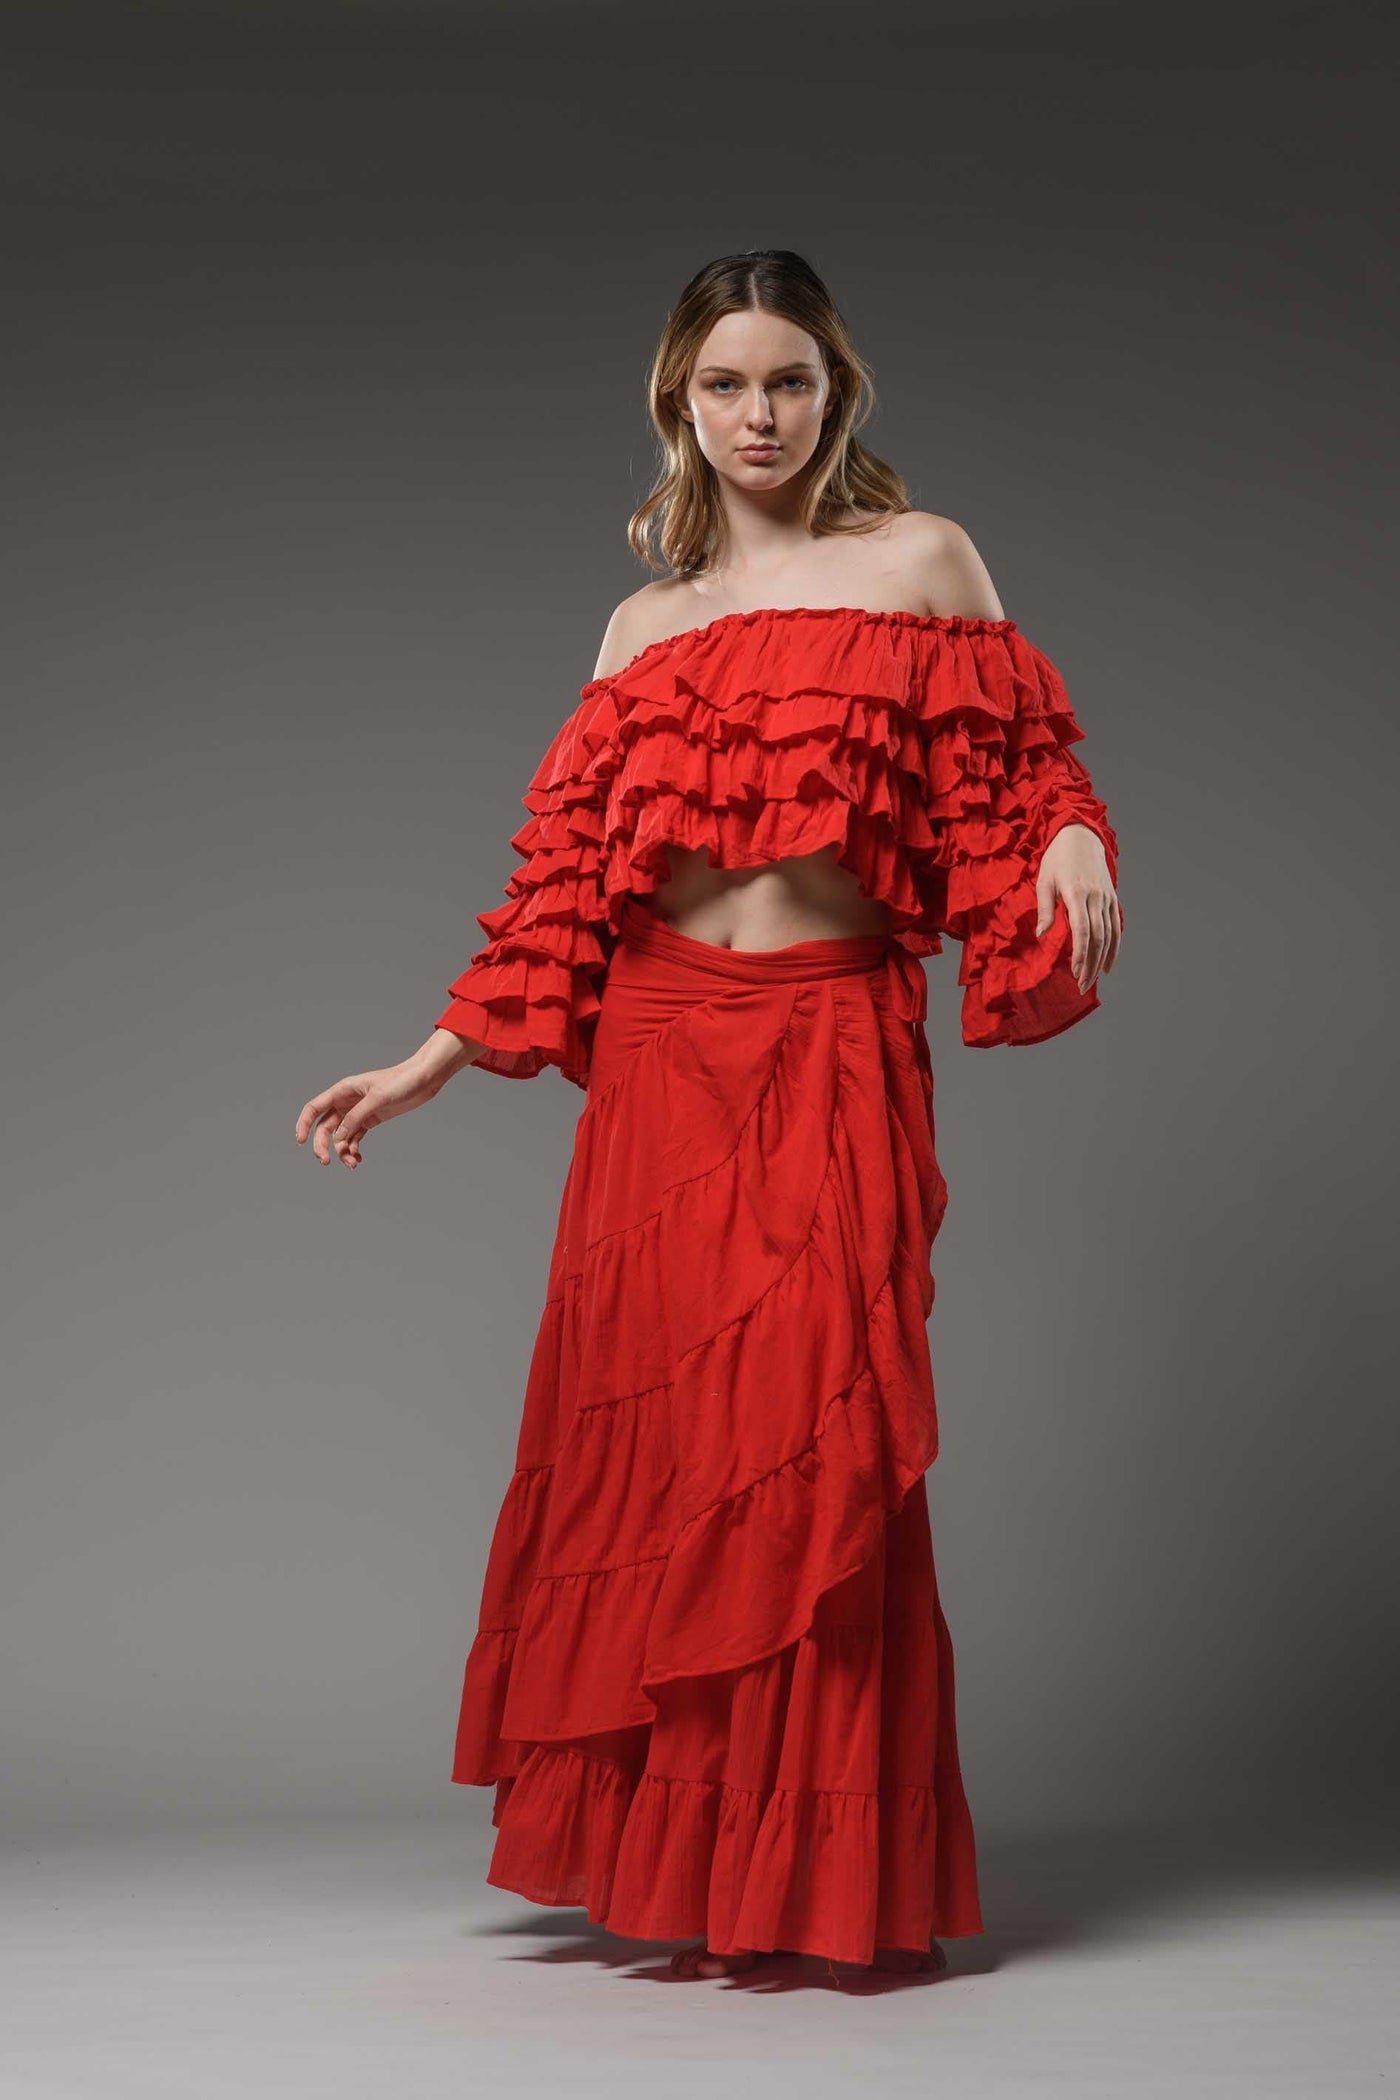 Bohemian gypsy fashion multilayer ruffled red top crop